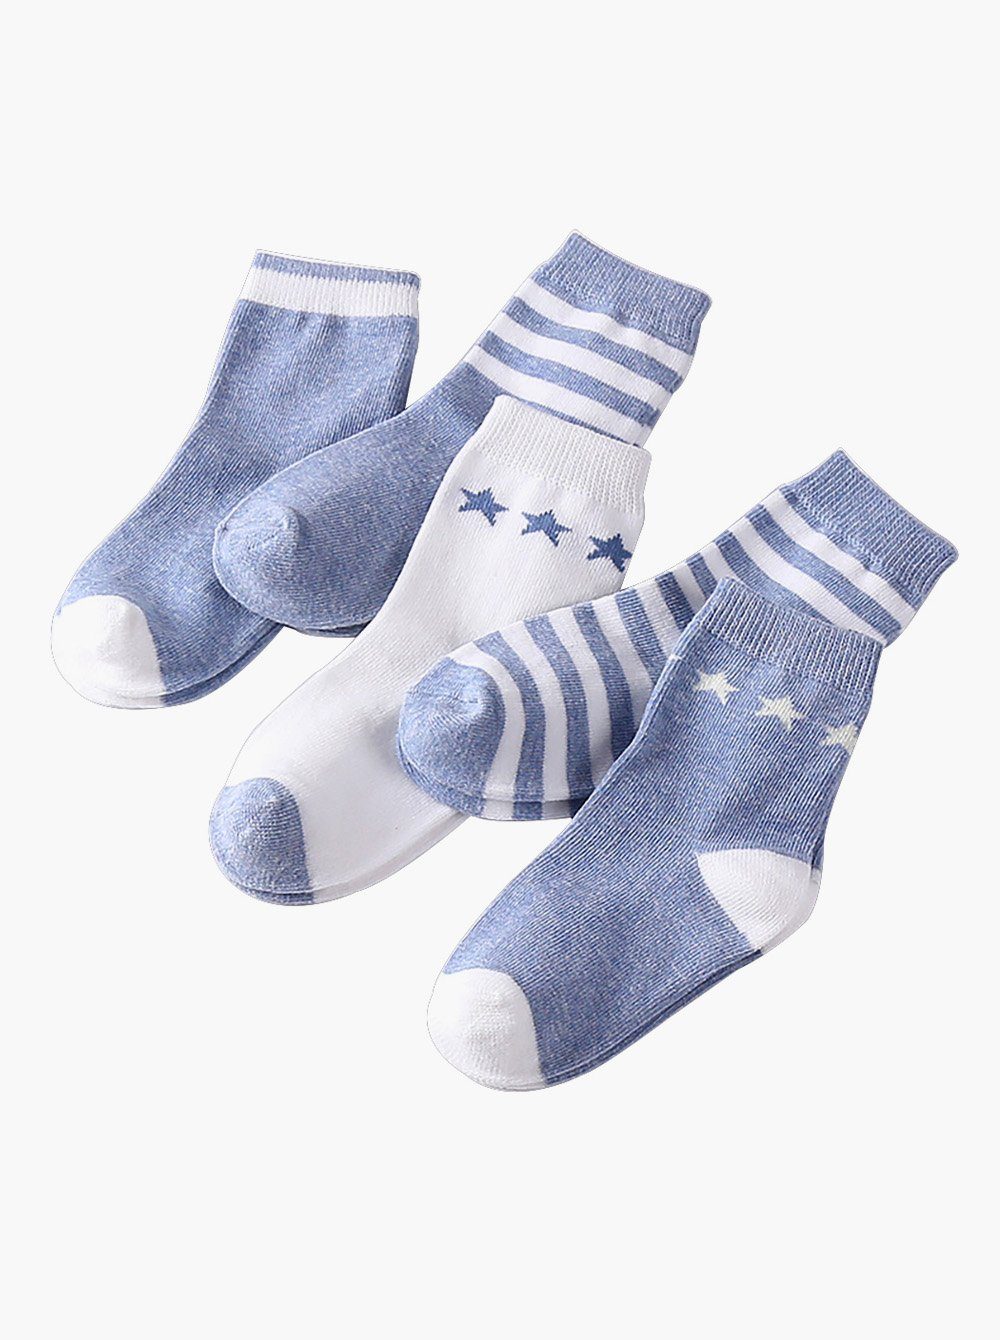 axy Langsocken axy Kinder Socken 5 Paar Multipack Jungen Mädchen Kindersocken (5er Pack) Geschenke Bunte Weich Kindersocken Blau